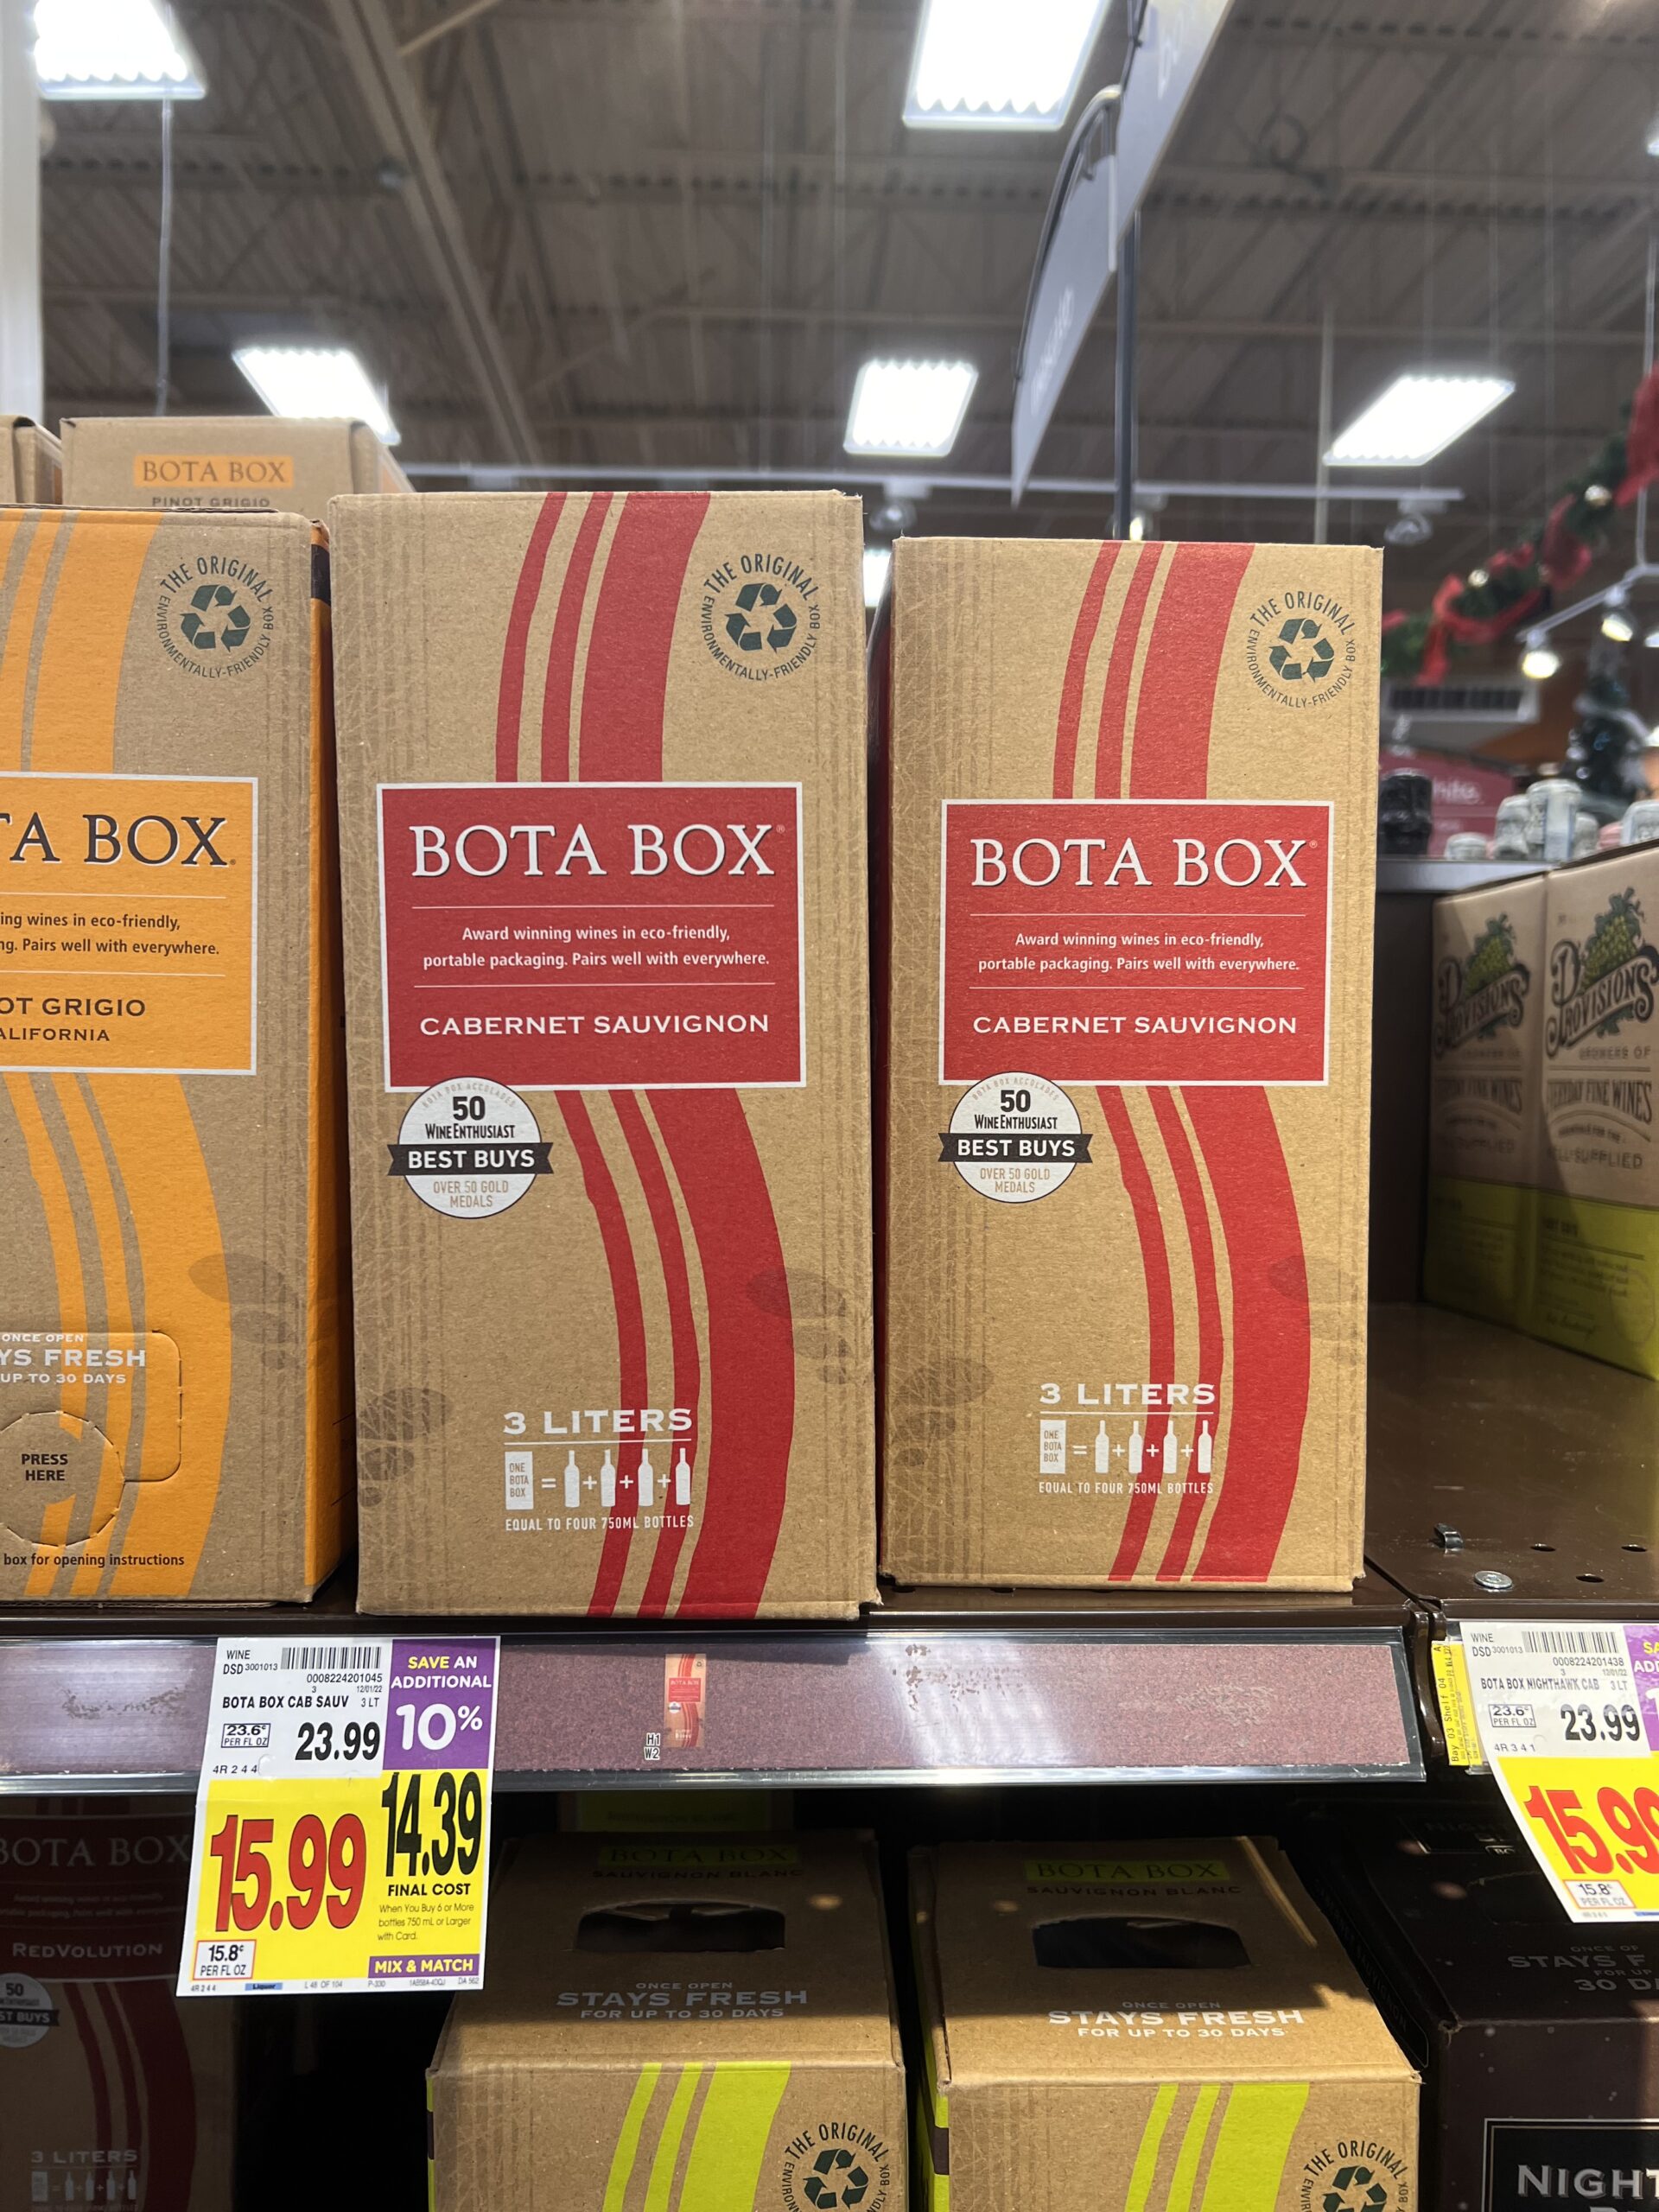 bota box wine kroger shelf image 4